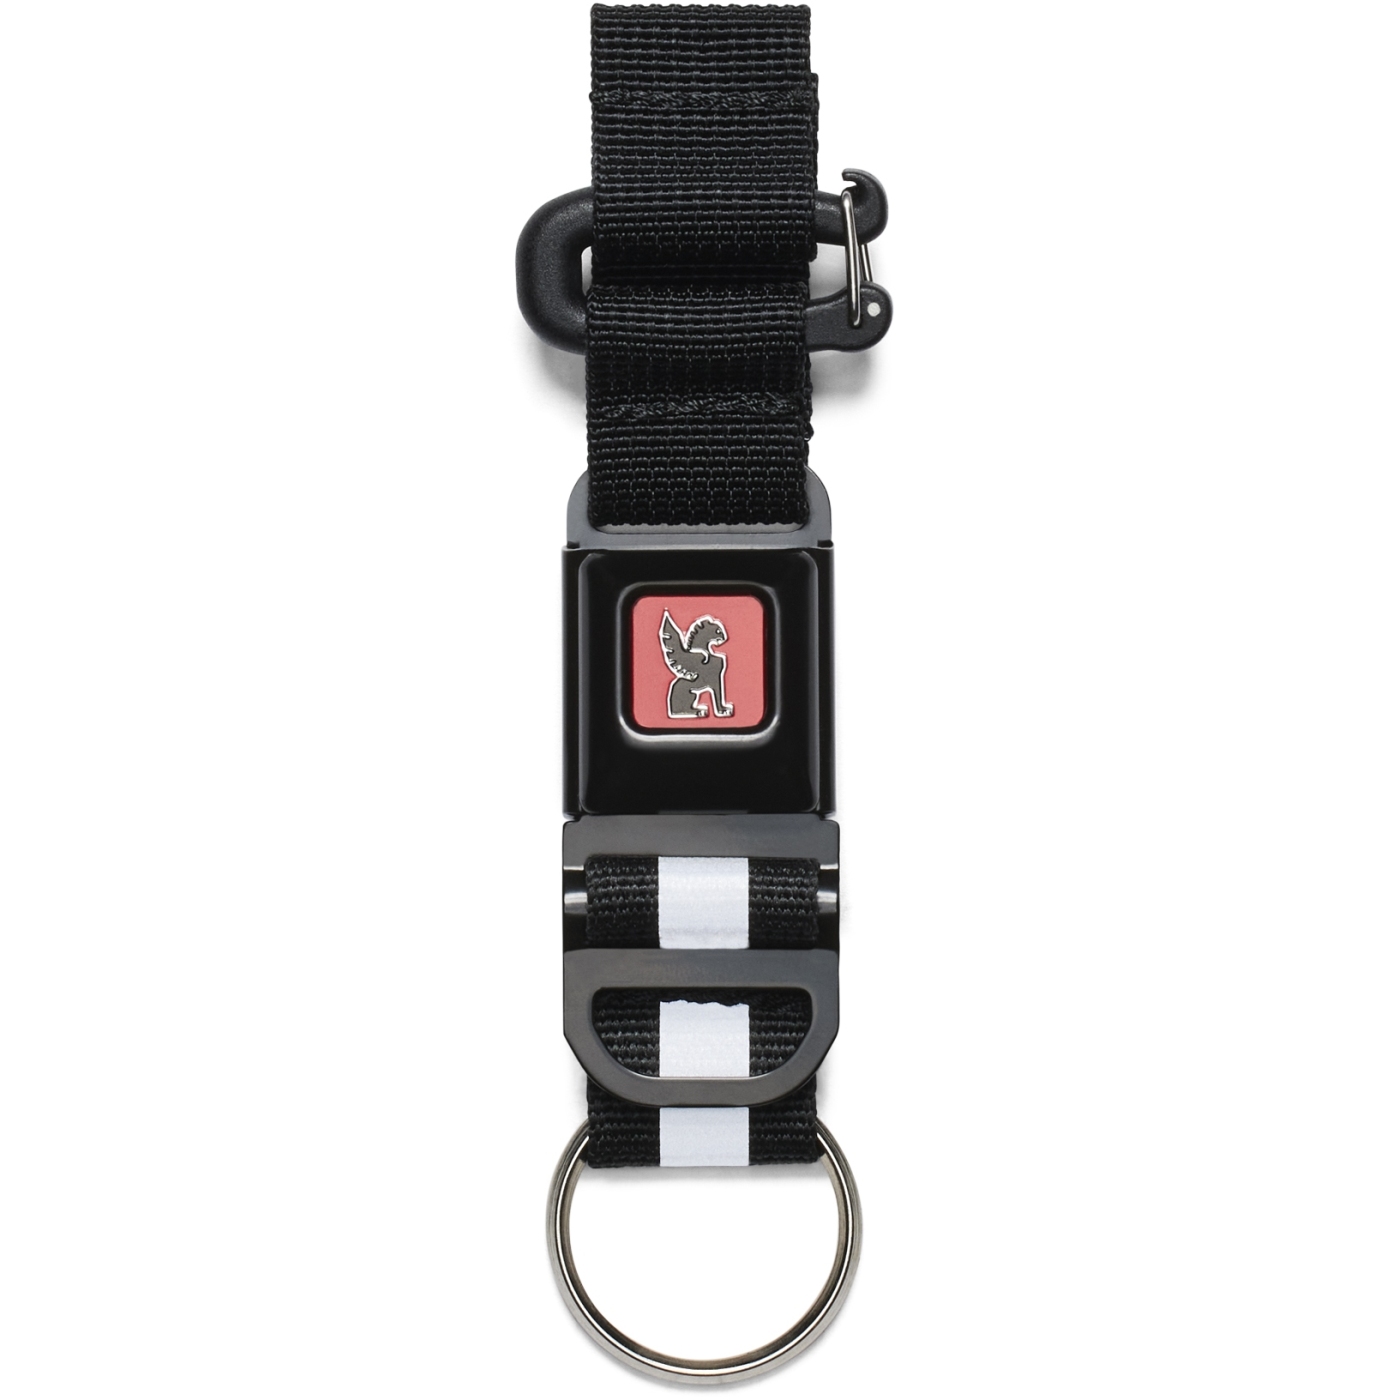 Productfoto van CHROME Mini Buckle Keychain Sleutelhanger - Zwart / Zwart